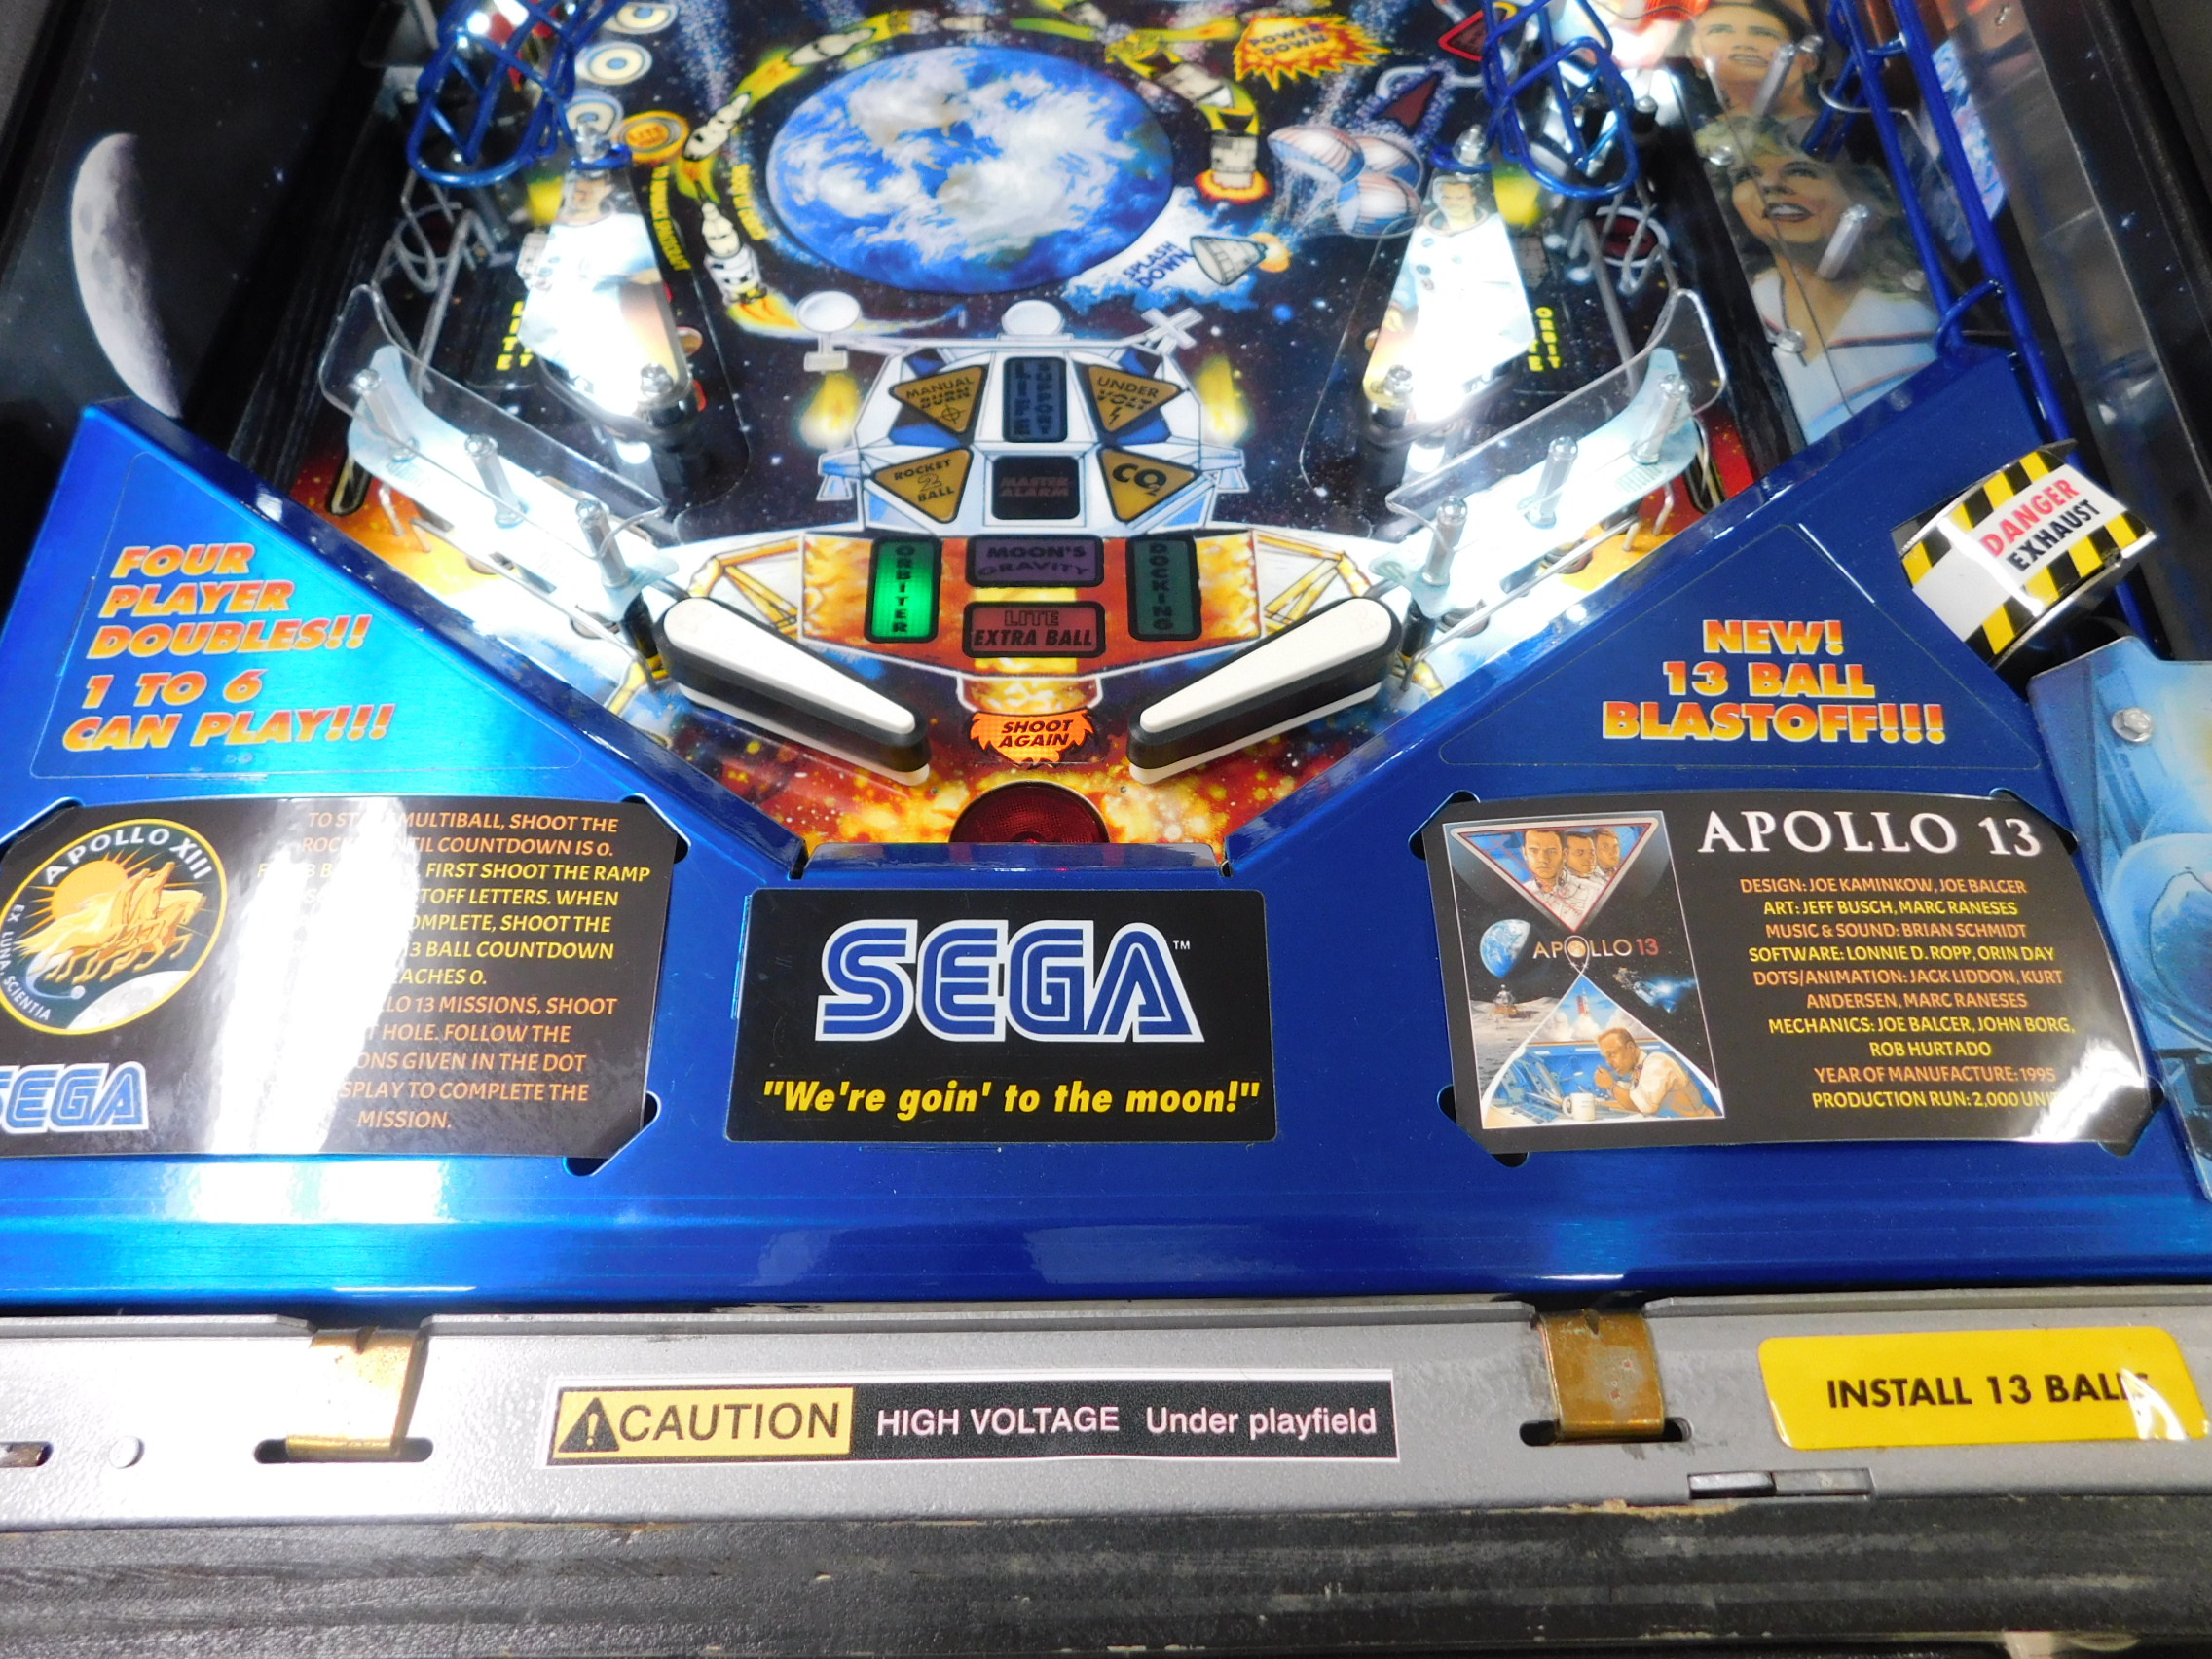 Sega Apollo 13